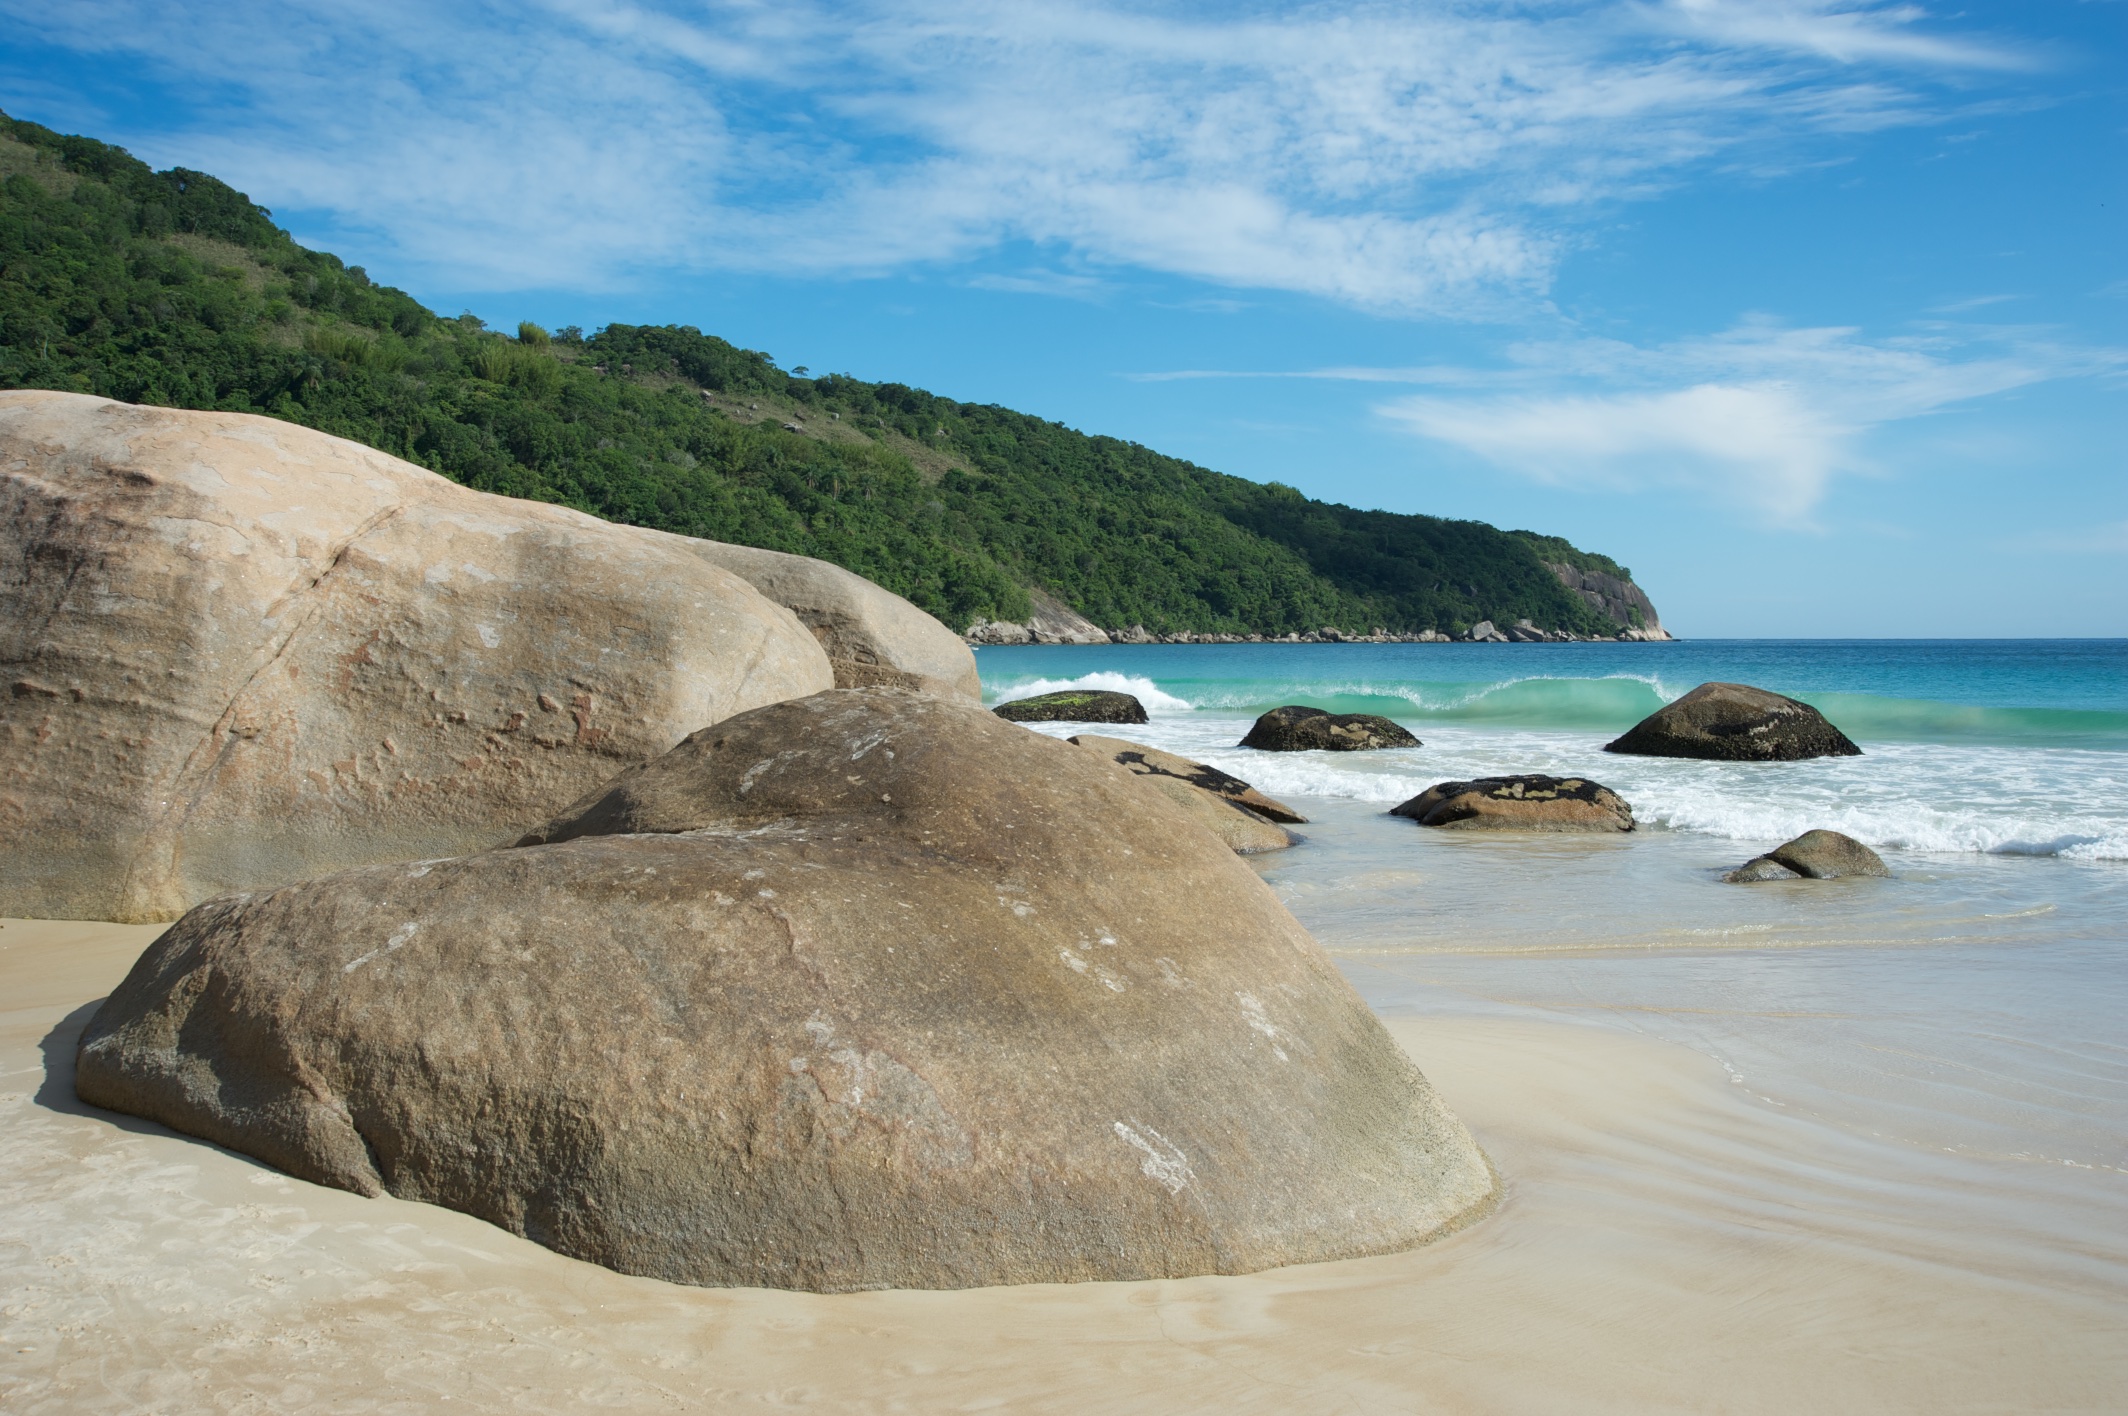  Rocks on Beach,&nbsp;Lopes Mendes, Ilha Grande, Brazil 